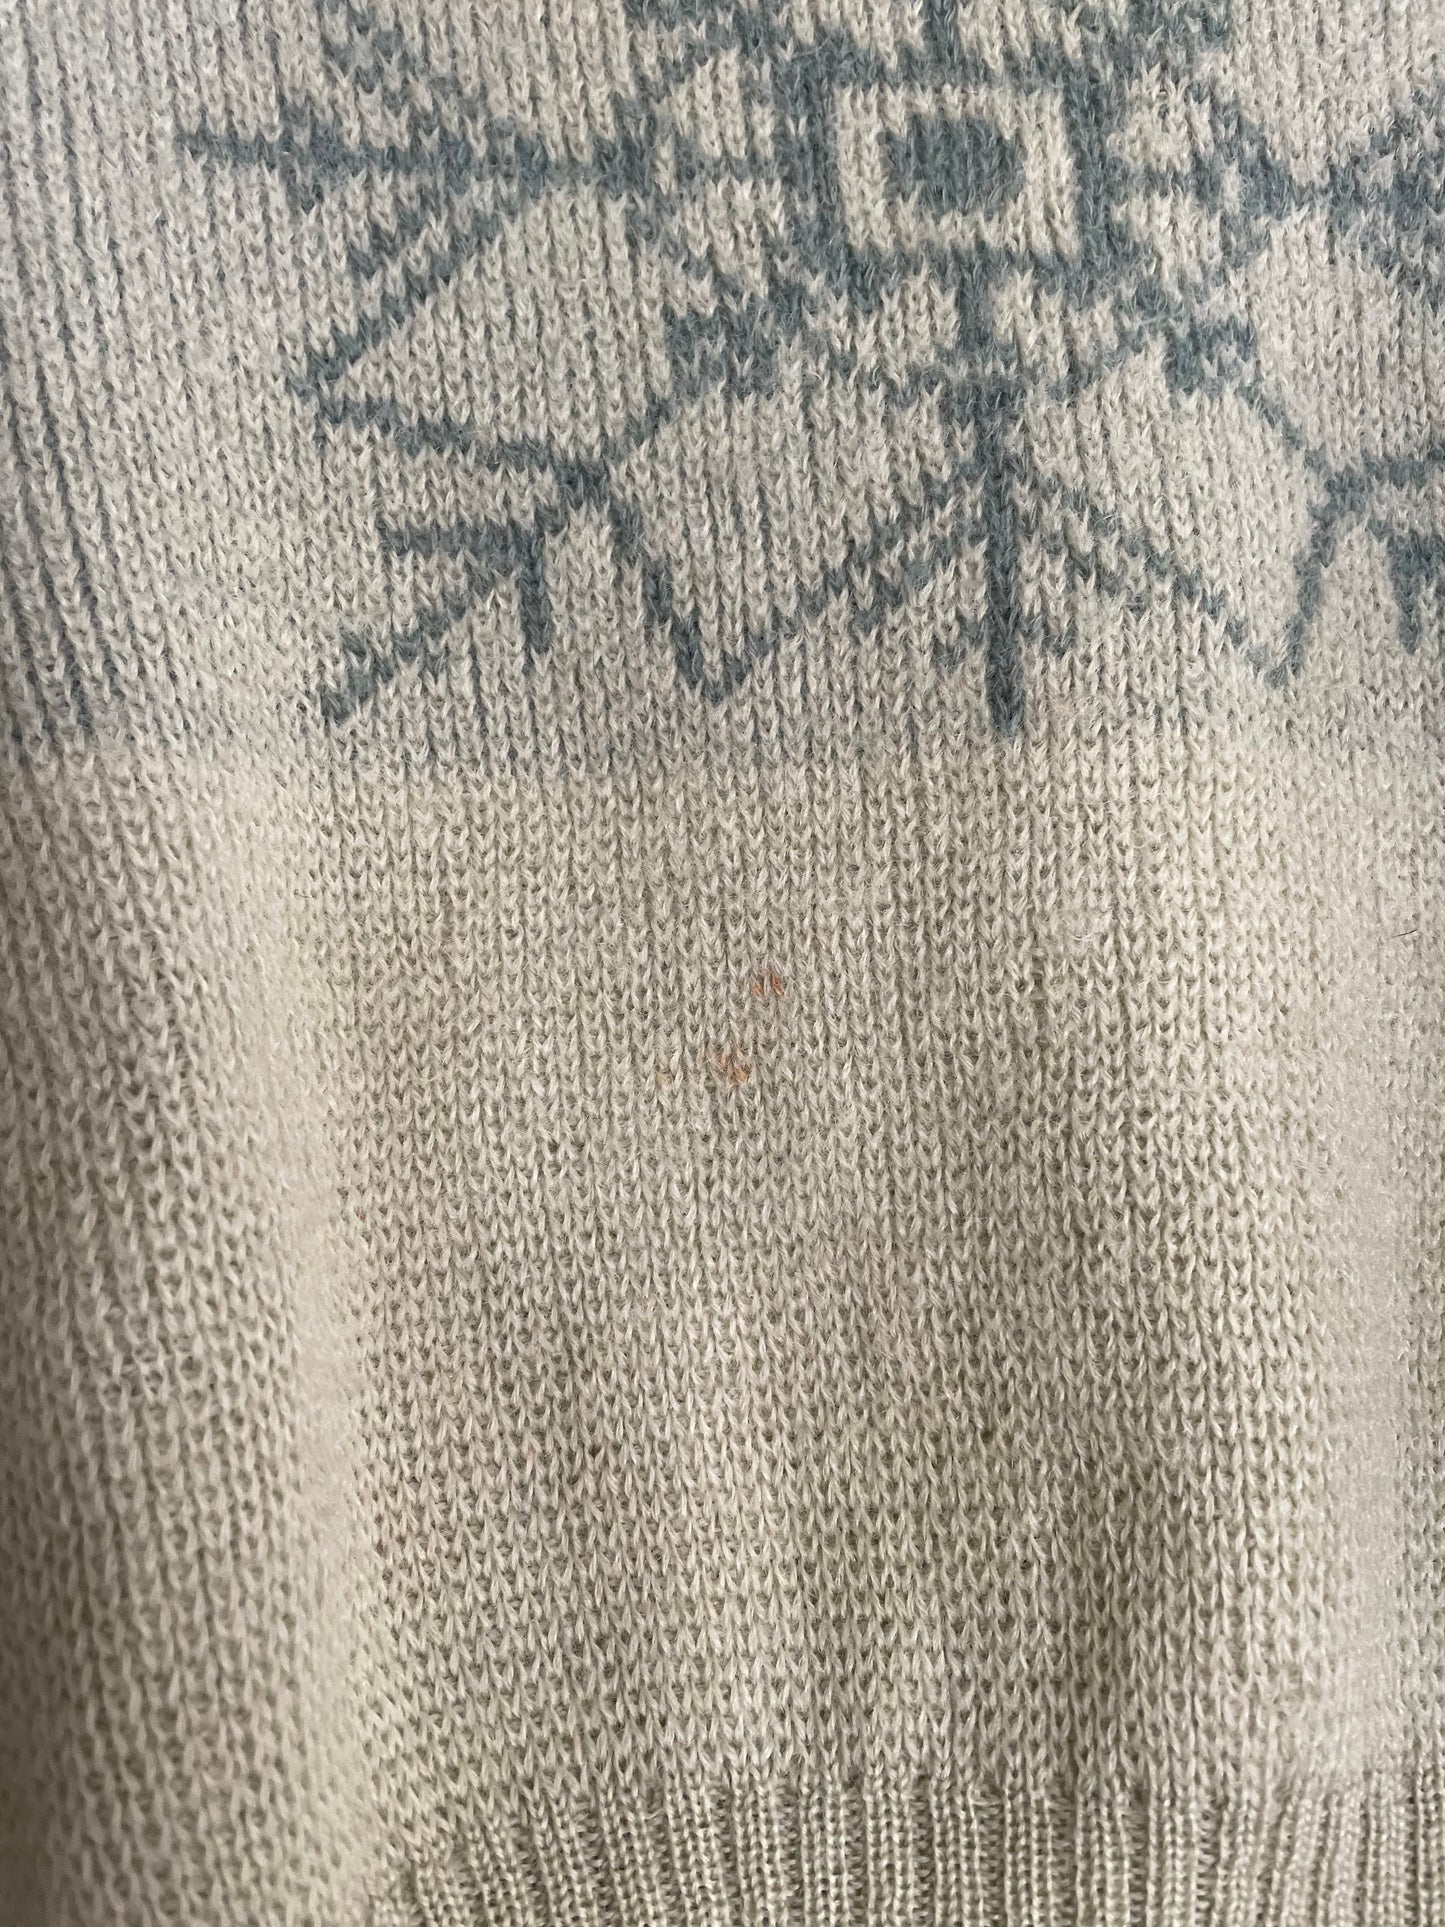 40s/50s Snowflake Sweater